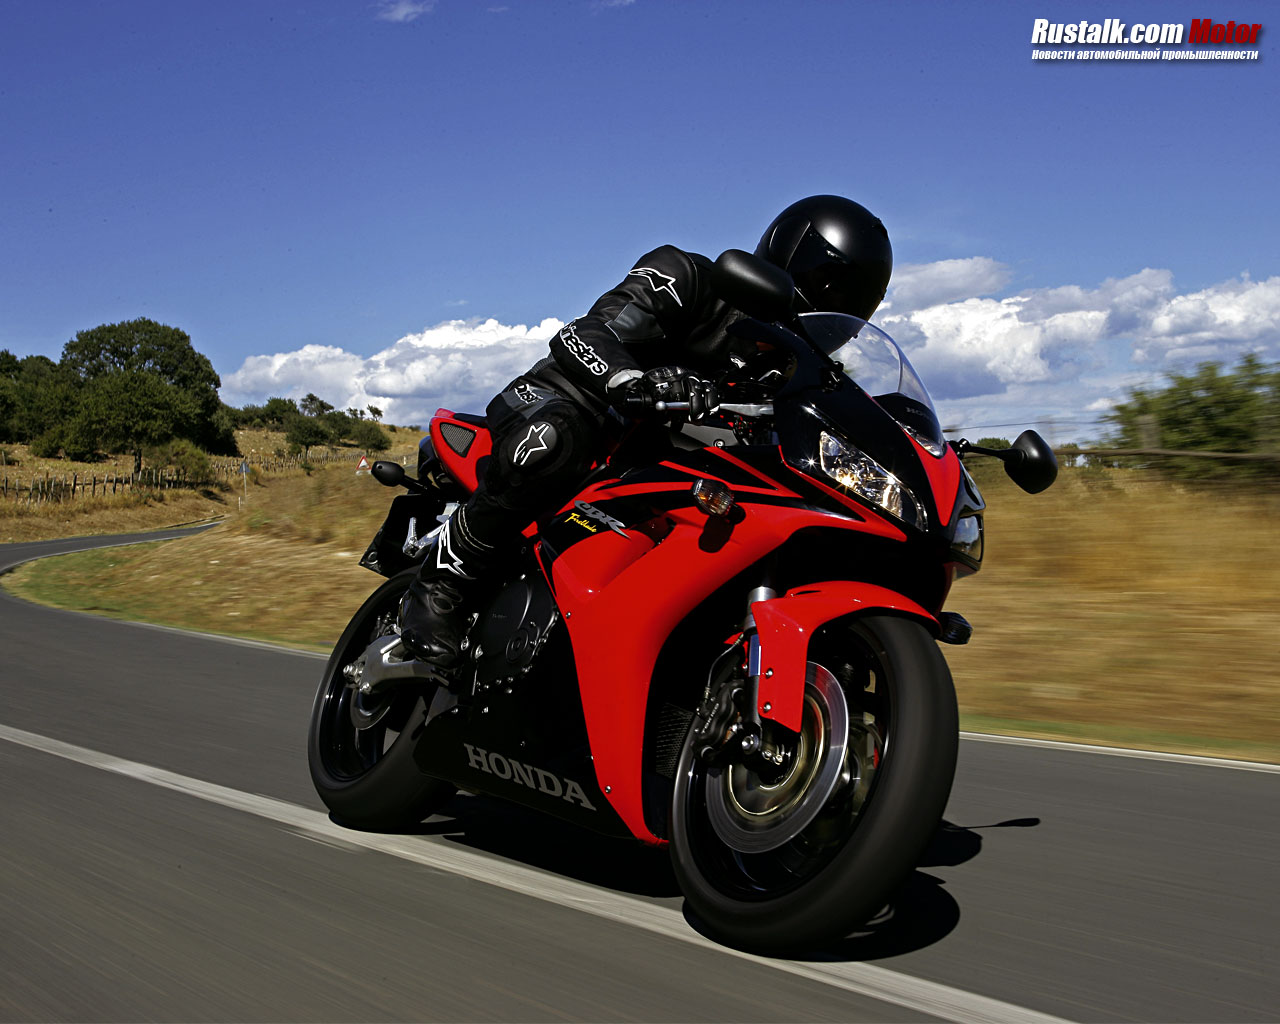 Foto Honda - Moto motocicletta Moto motocicli